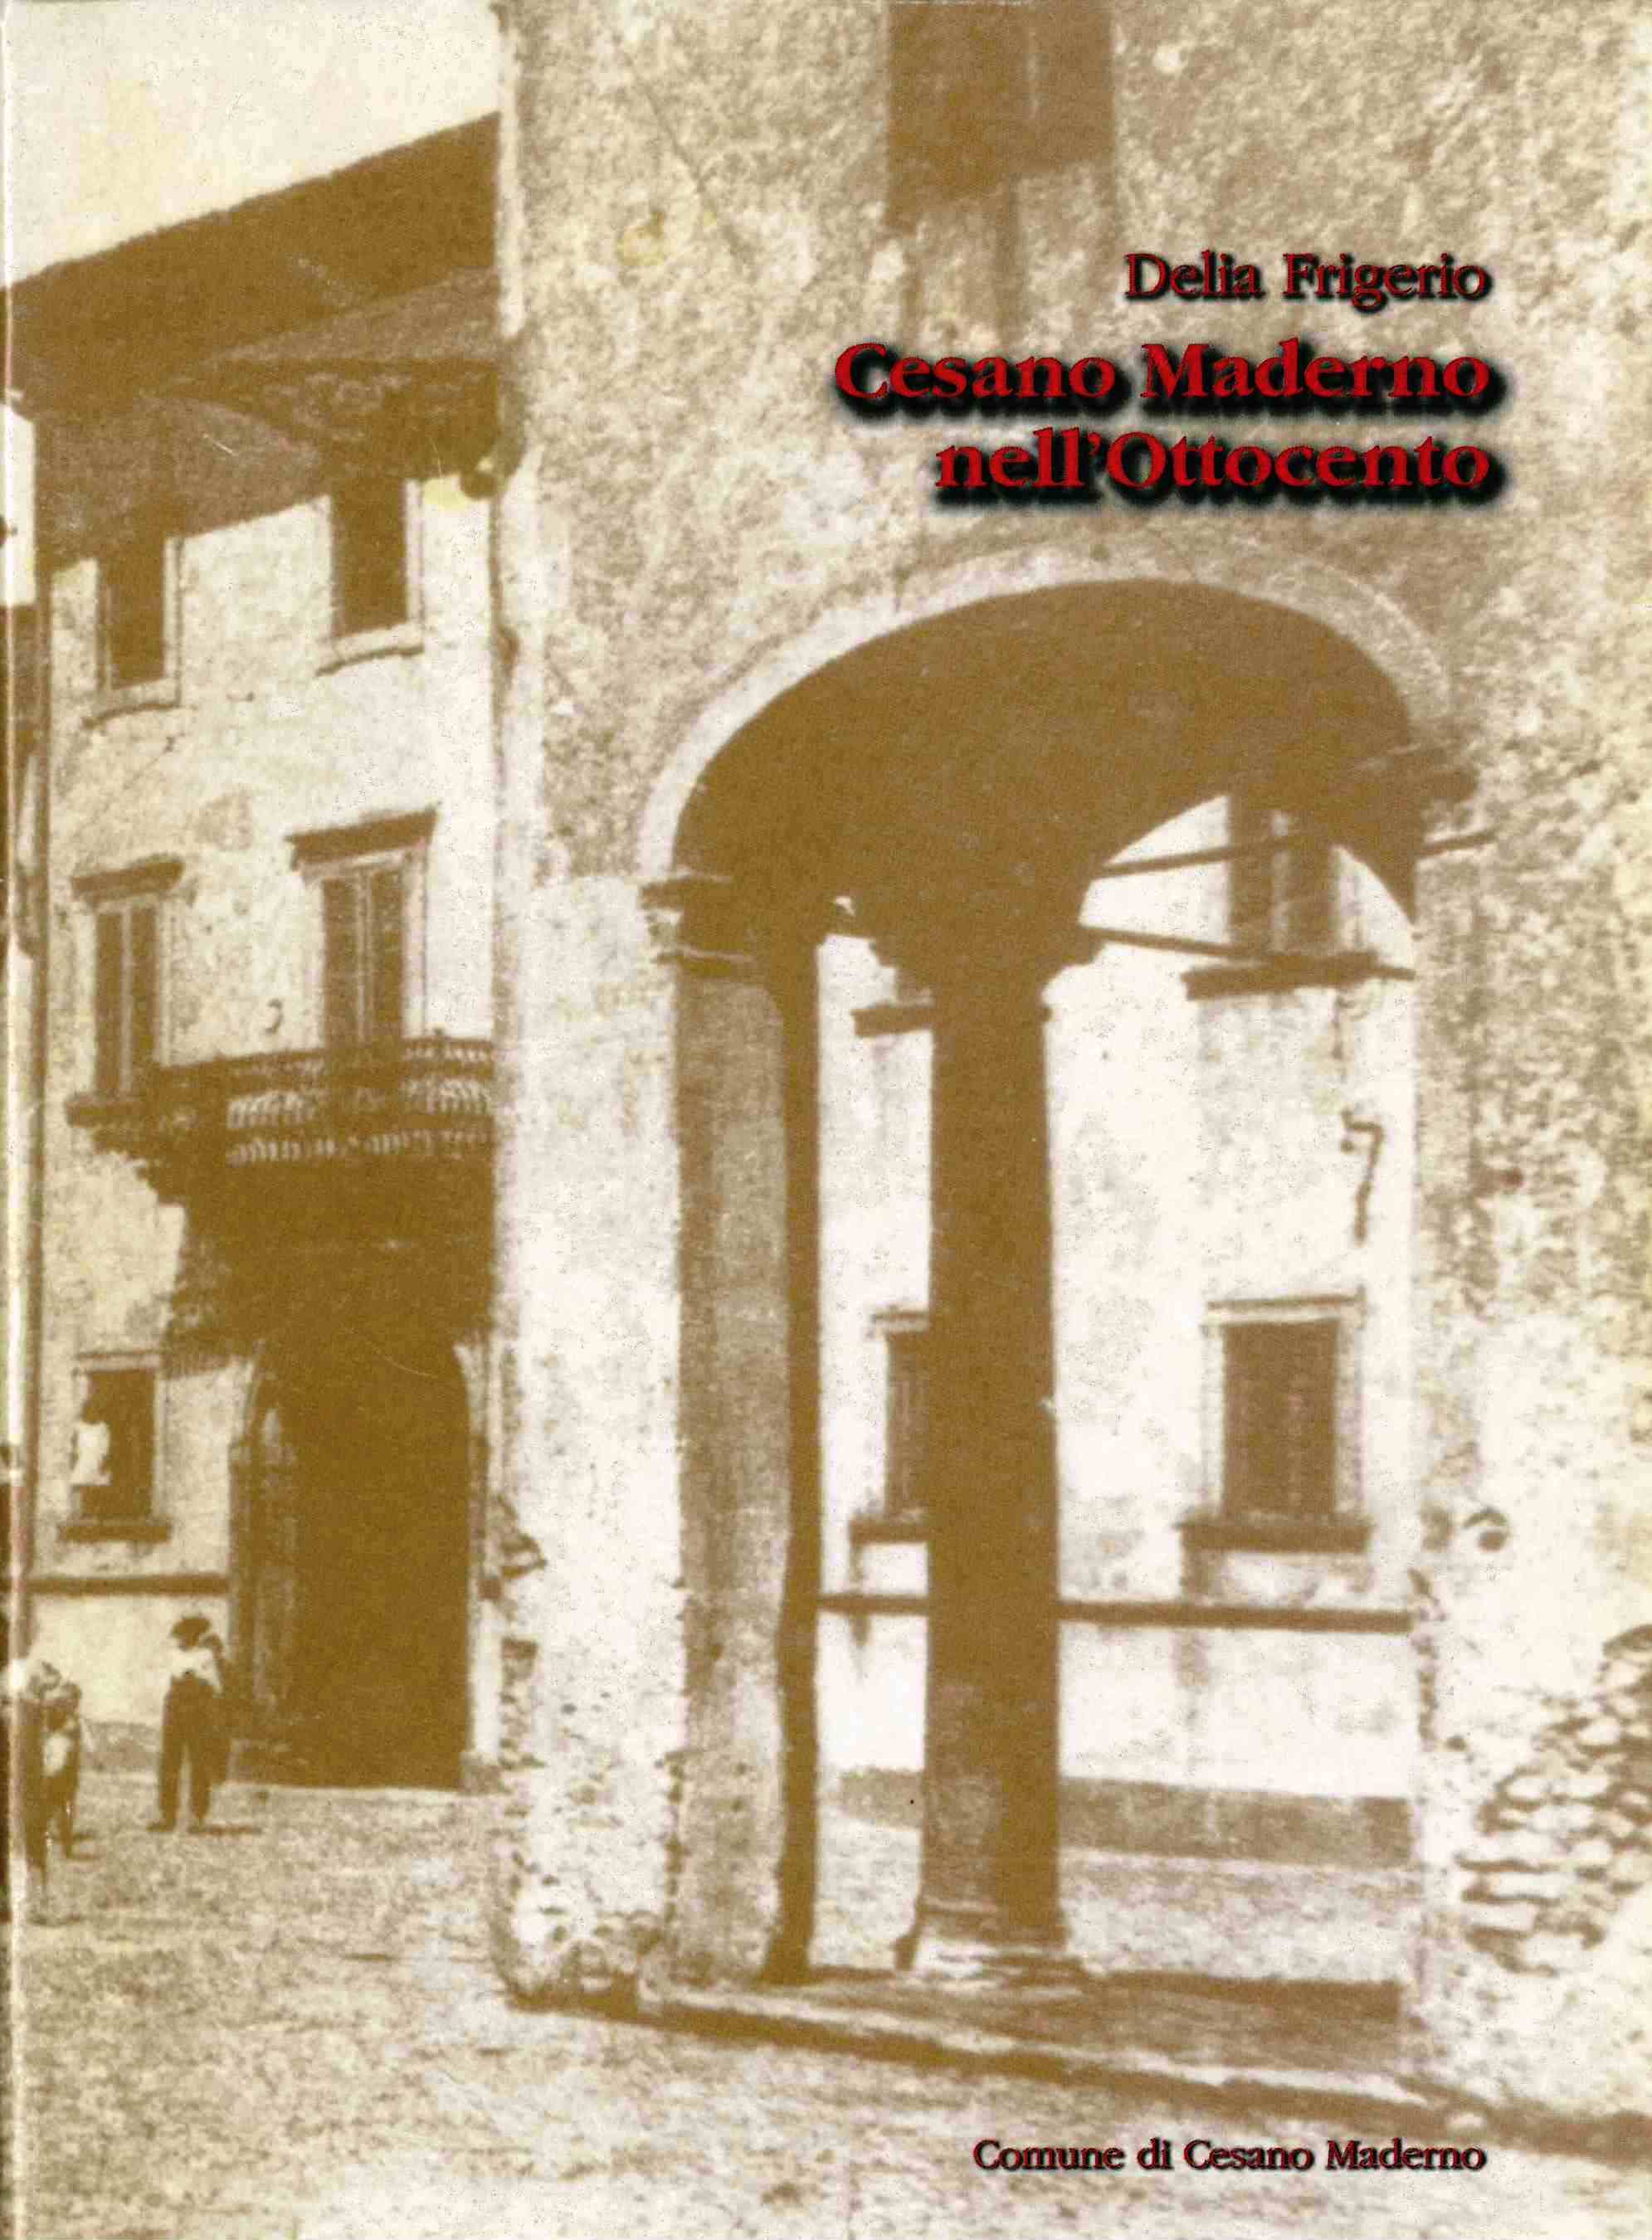 Cesano Maderno nell’Ottocento